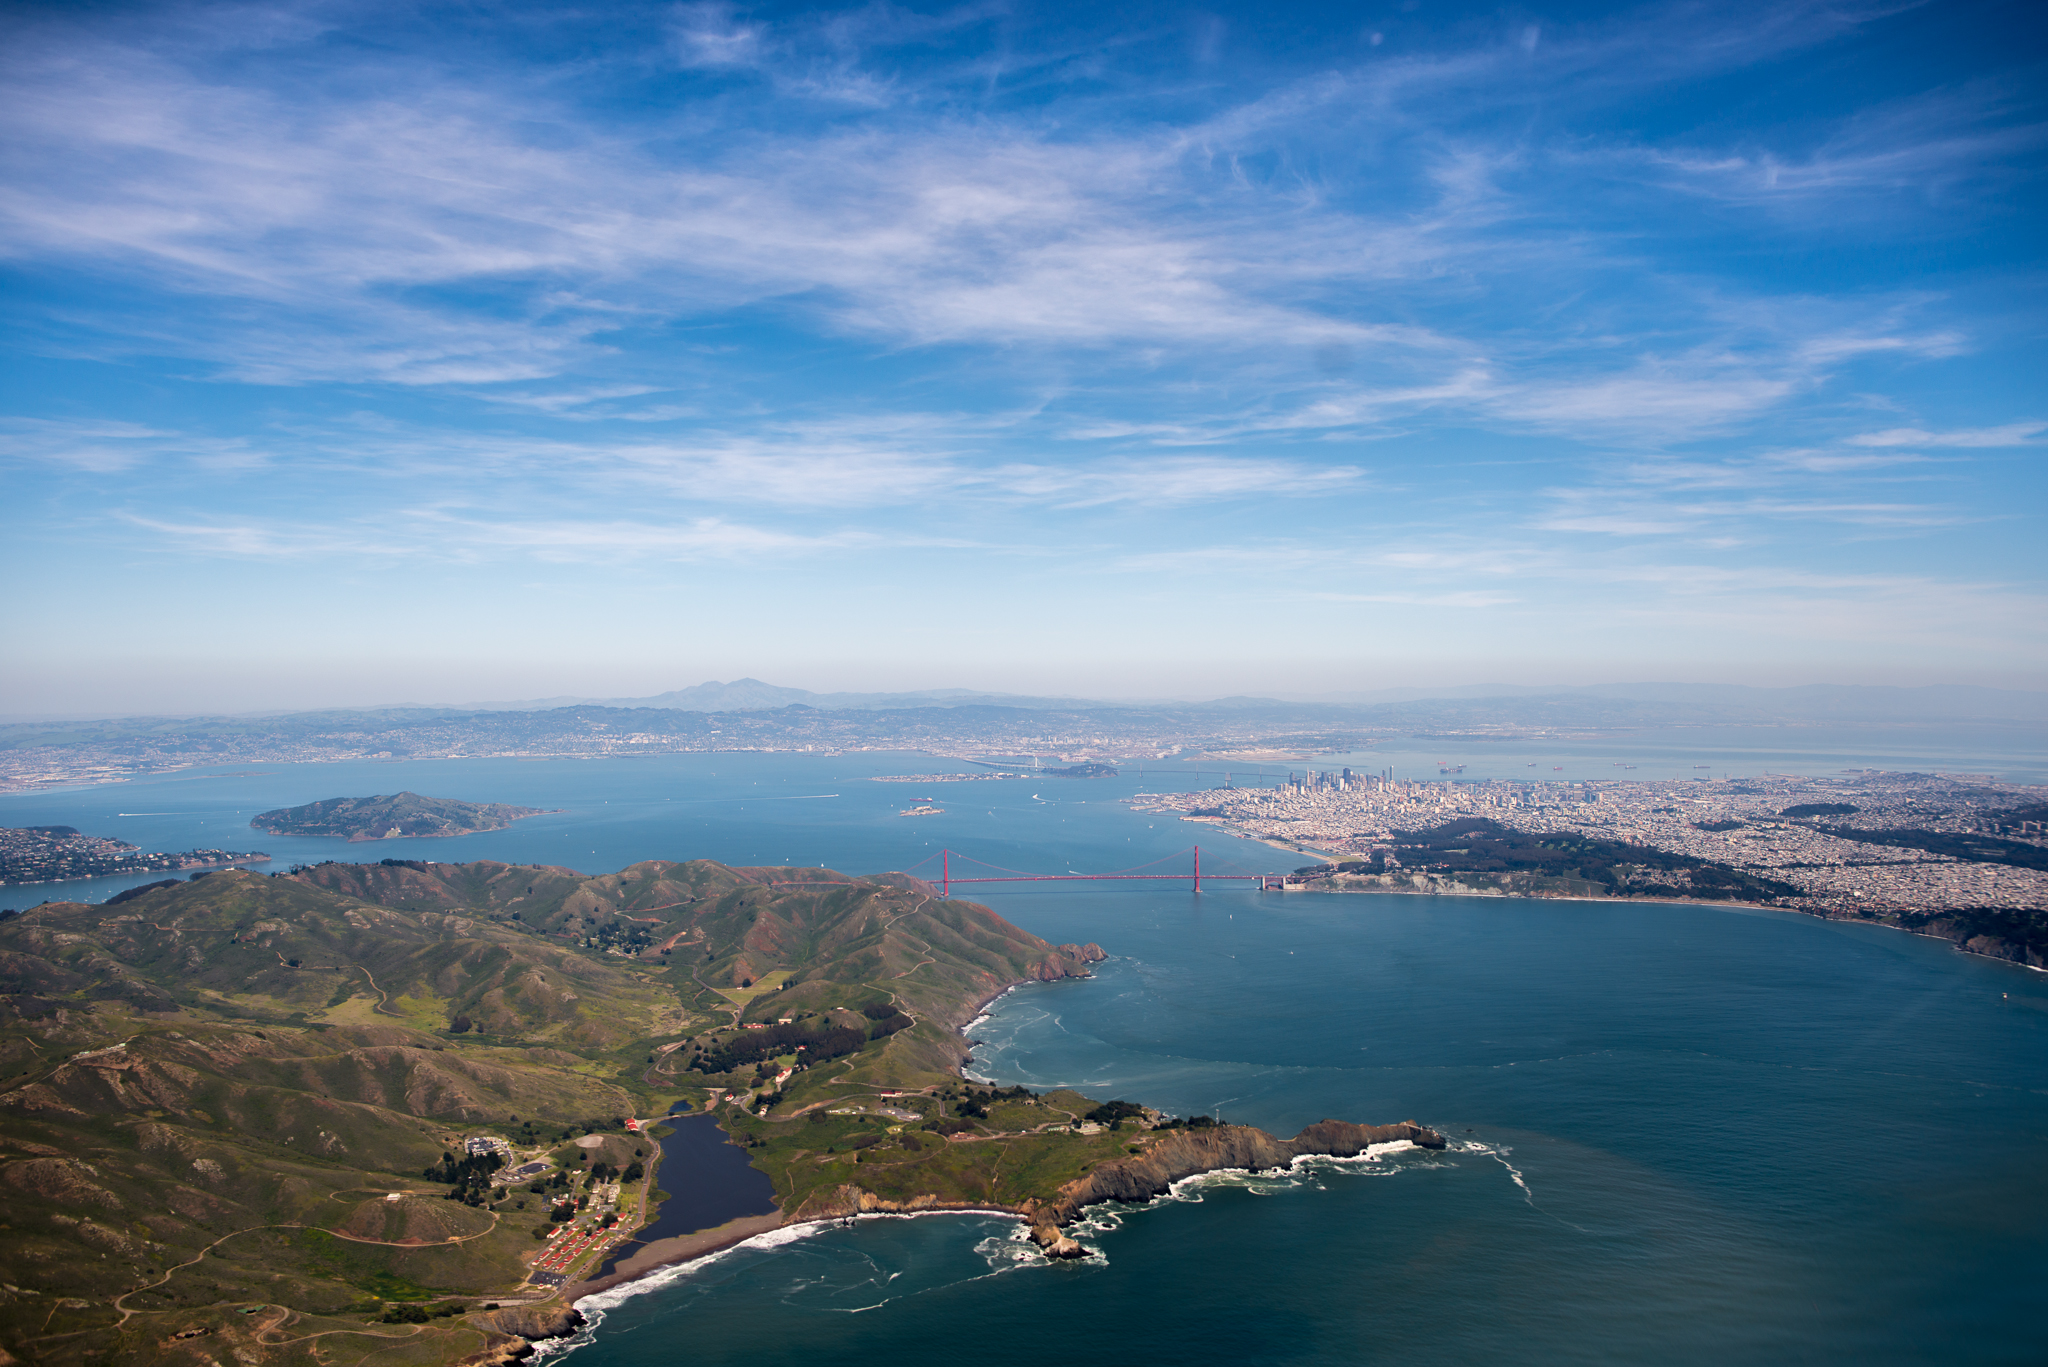 San Francisco Bay Area with the Golden Gate Bridge